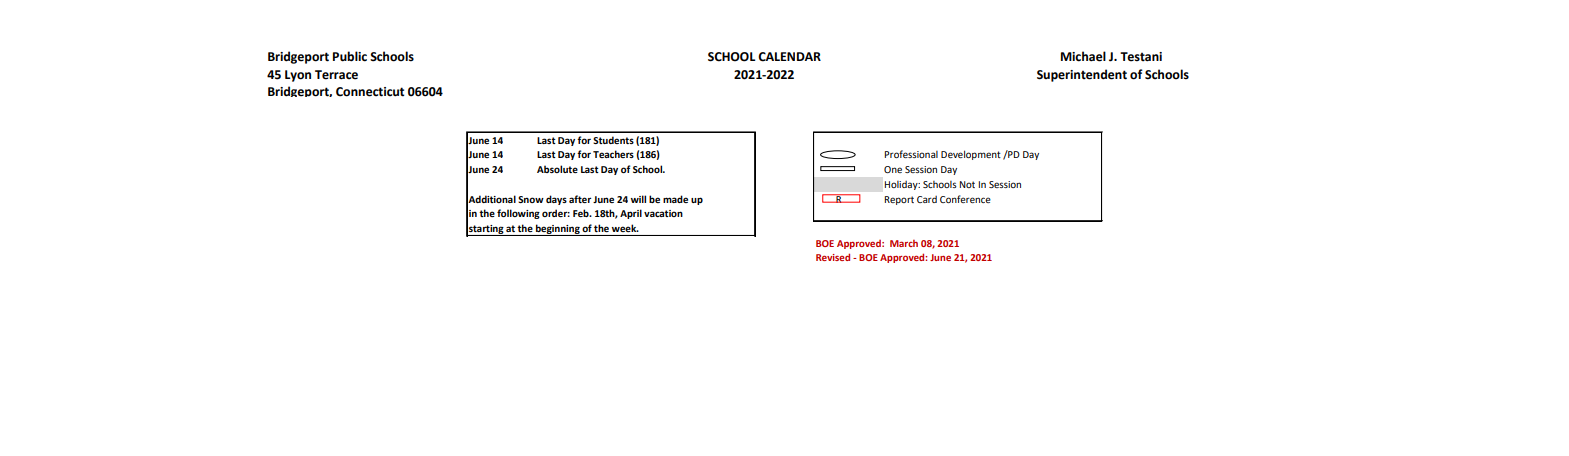 District School Academic Calendar Key for Longfellow School